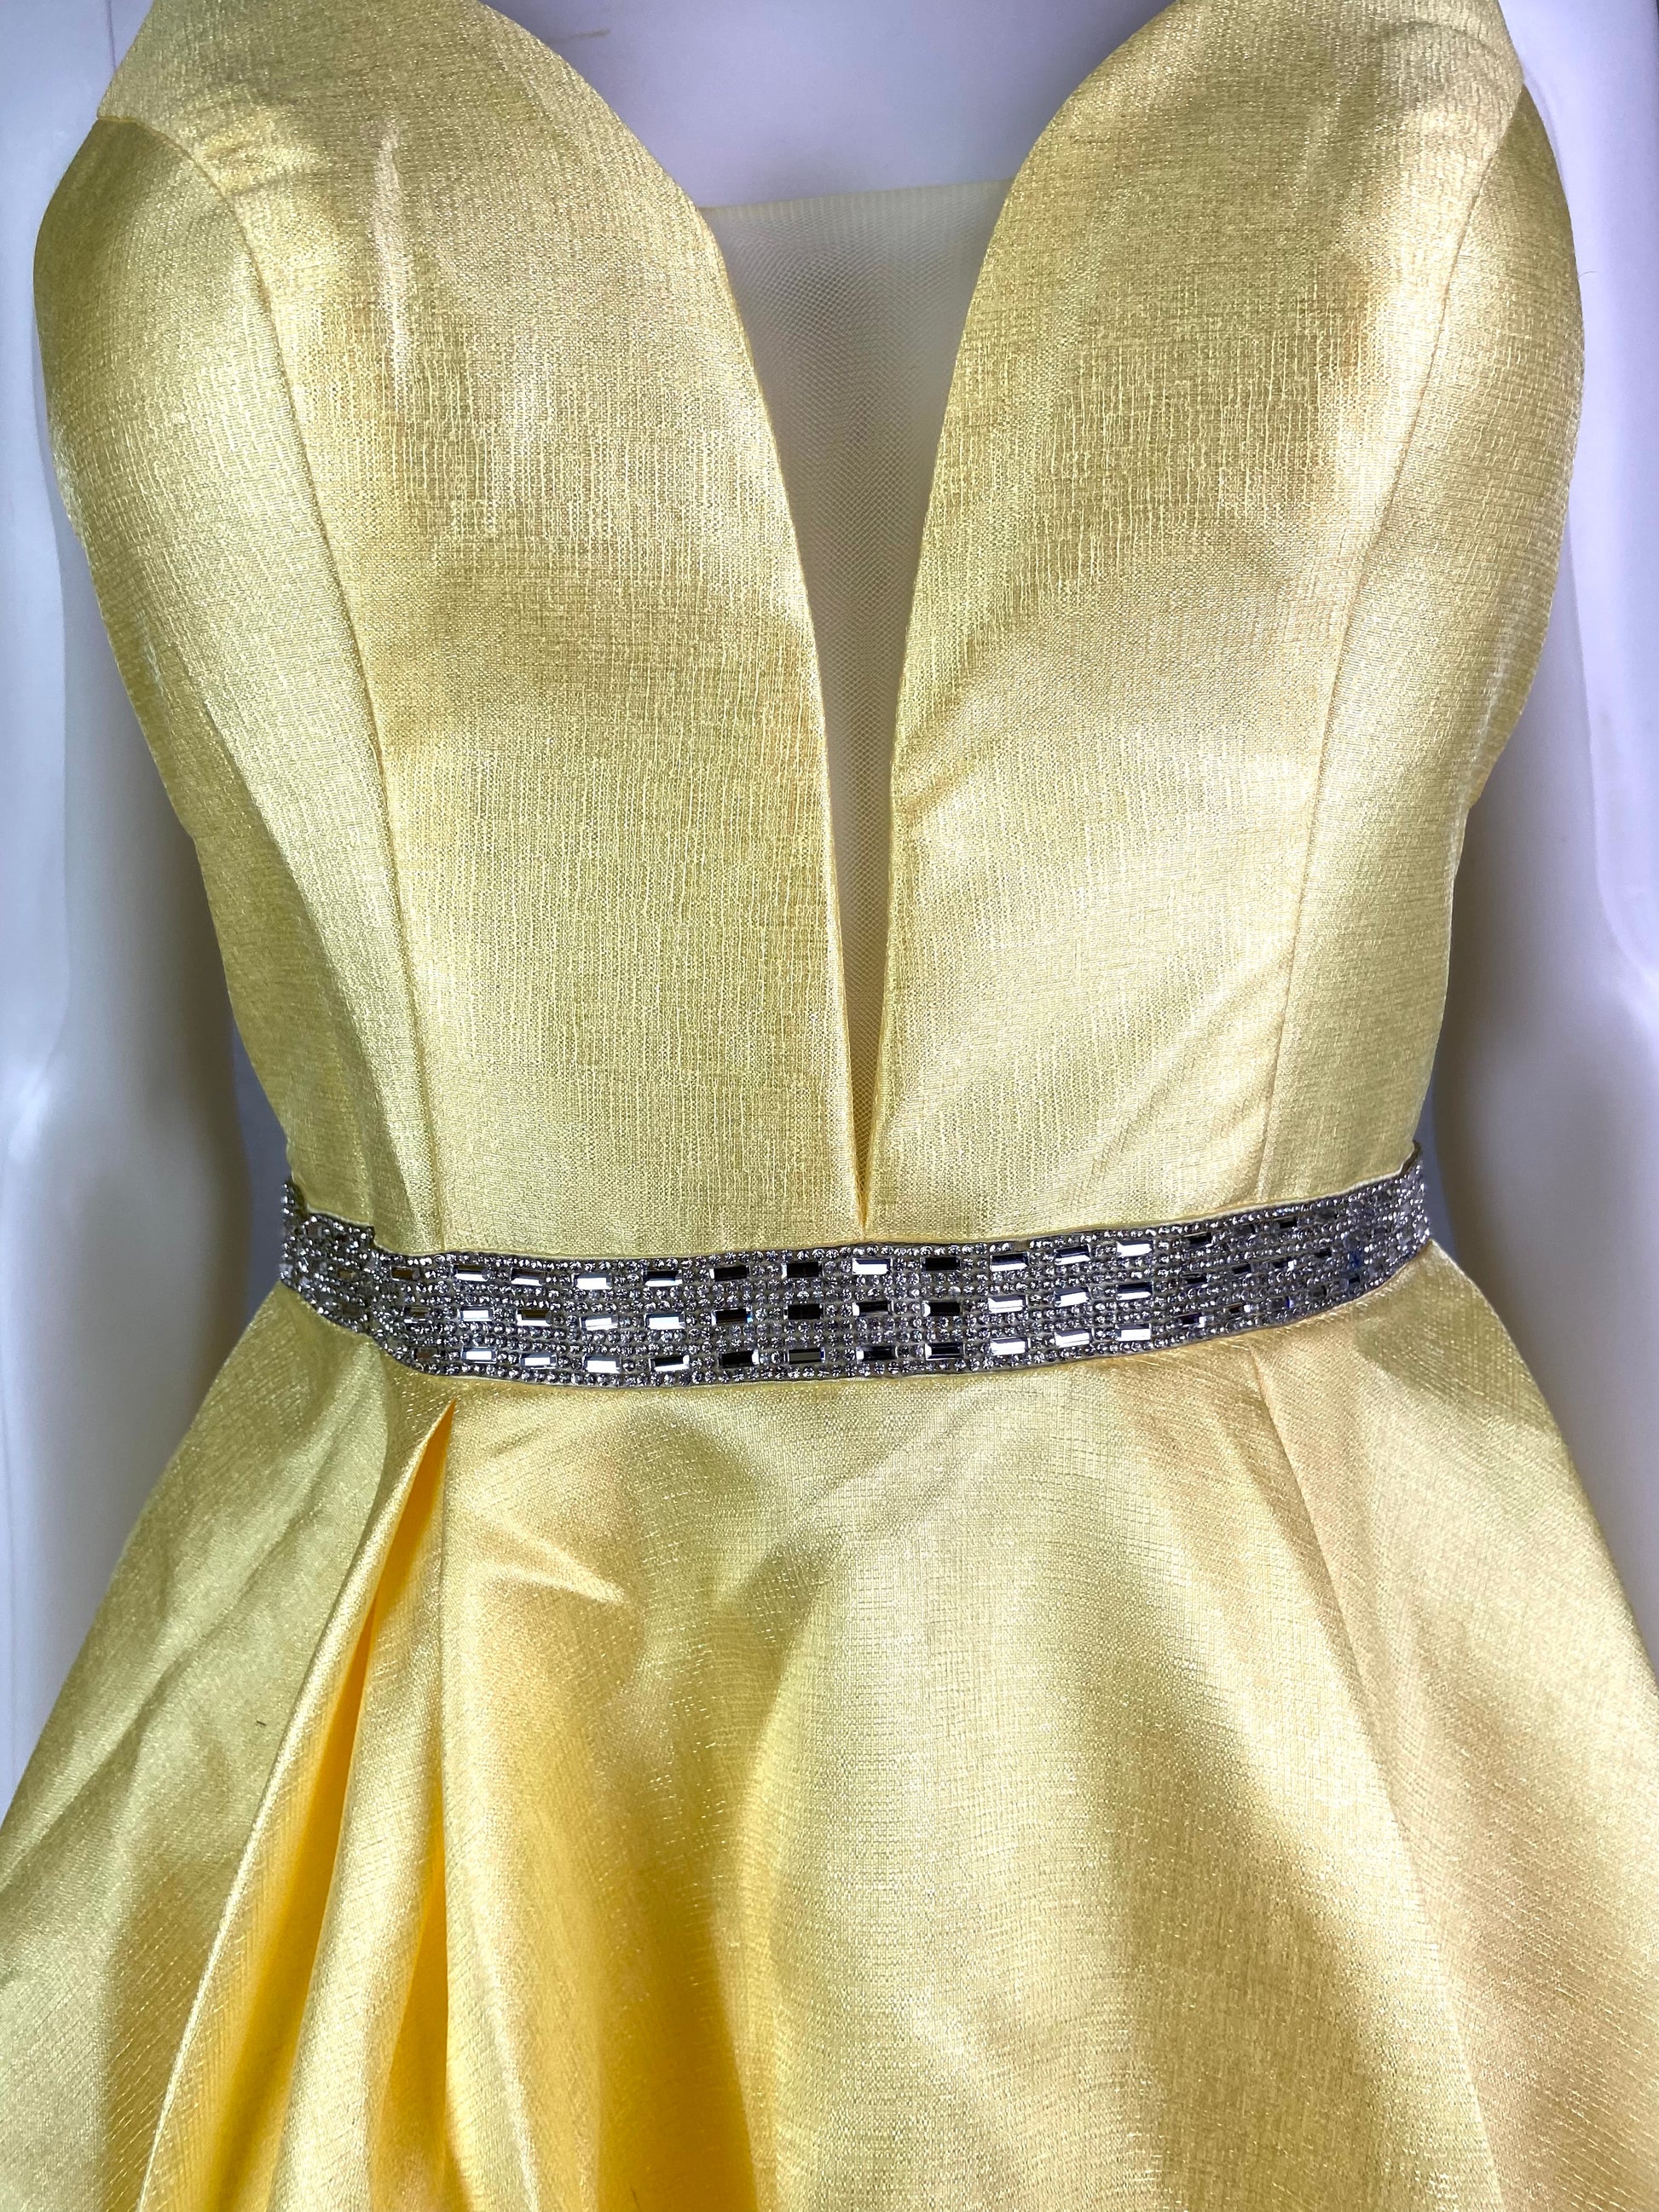 Vintage Promgirl Yellow Glitter Rhinestone Cocktail Dress ABBY ESSIE STUDIOS